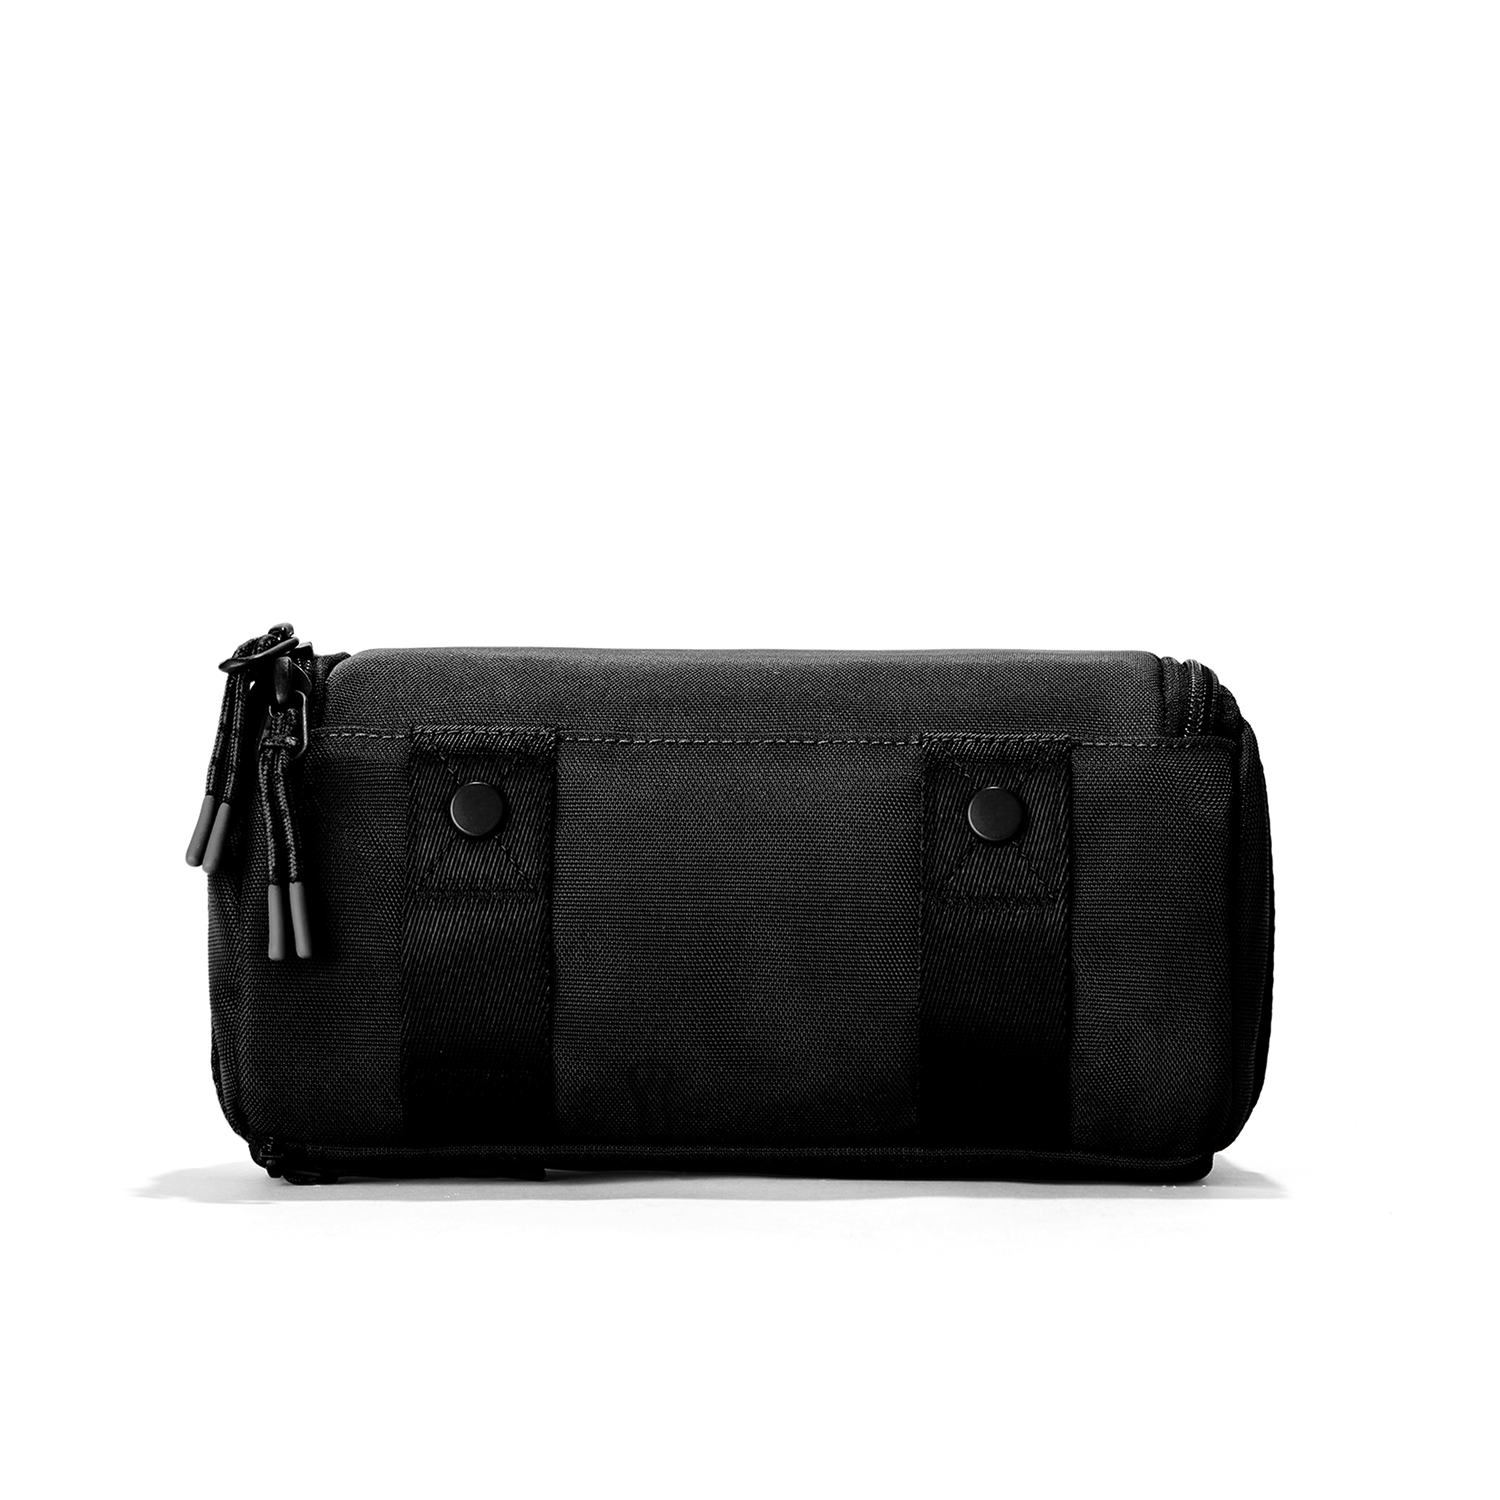 Black Large Duffel Bag - Lagos Convertible Duffel | Dagne Dover